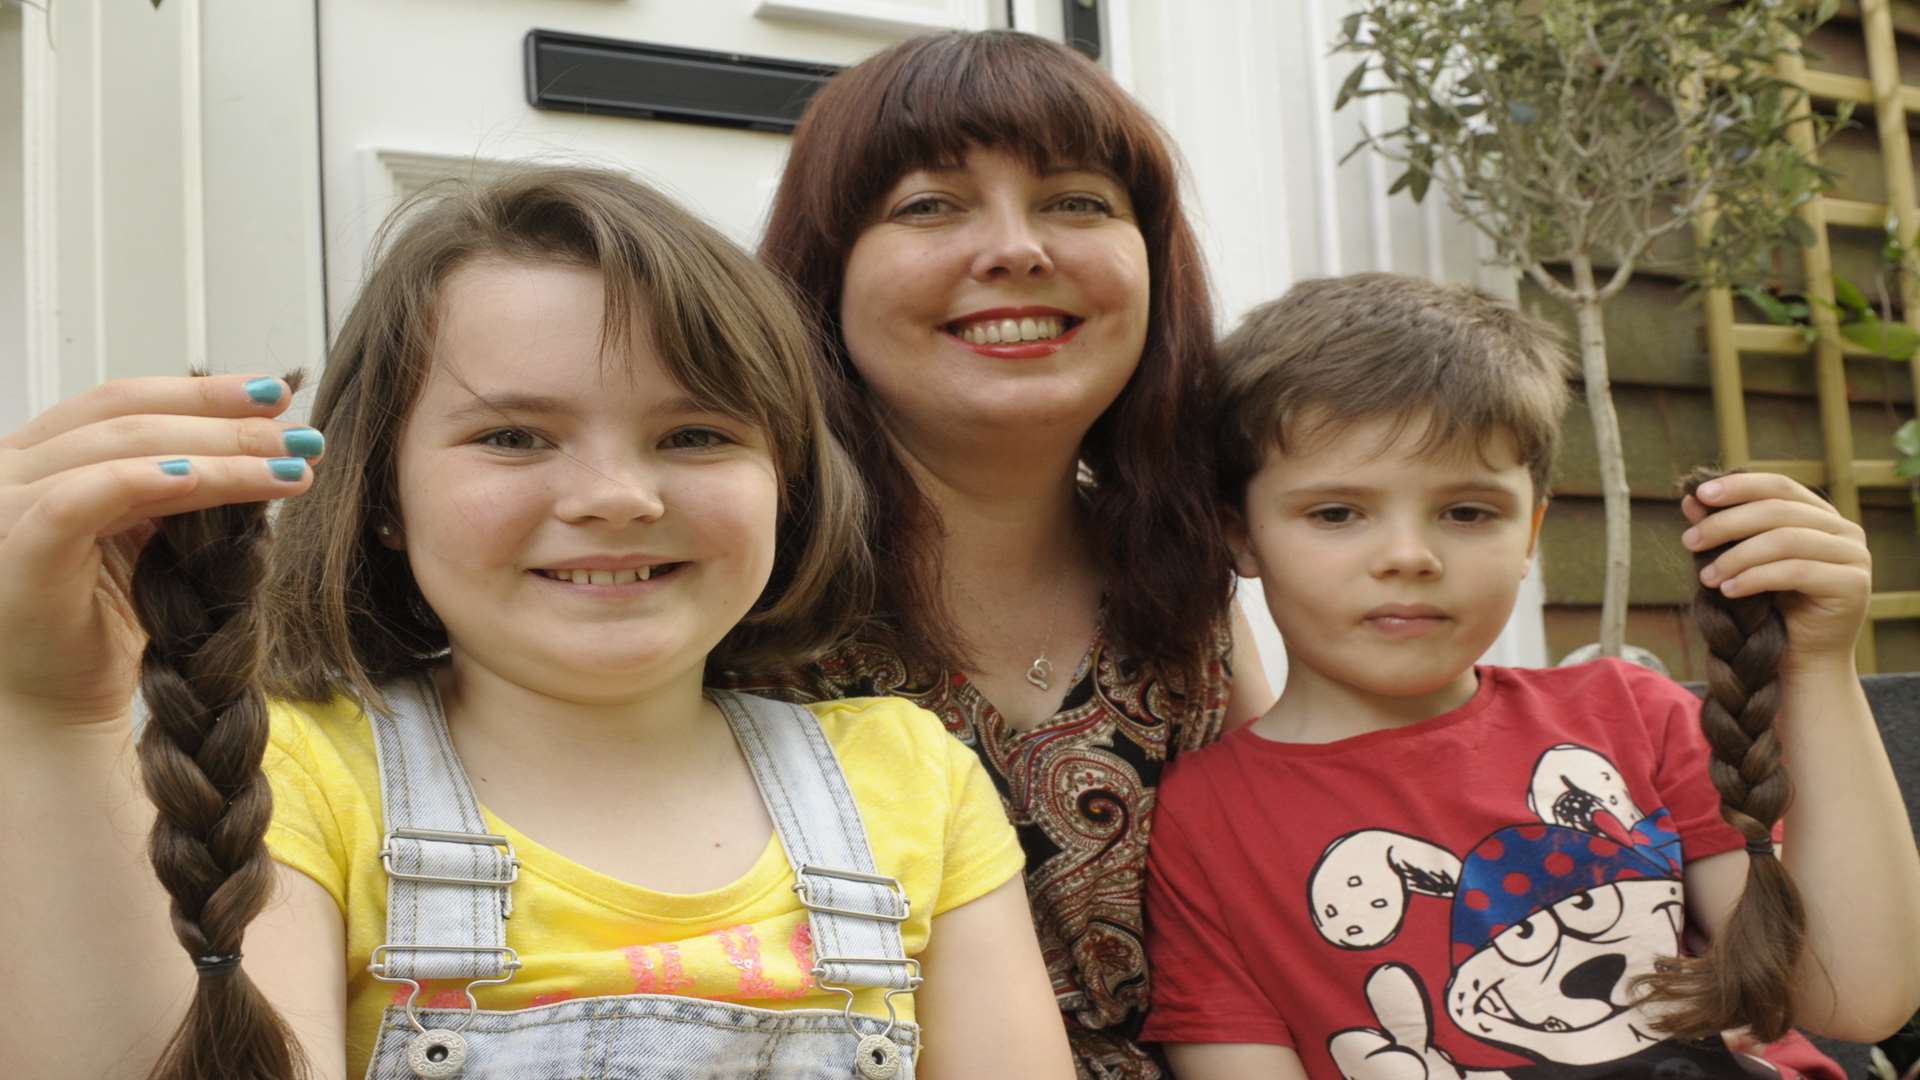 Michelle Jones with children Tallulah and Jasper